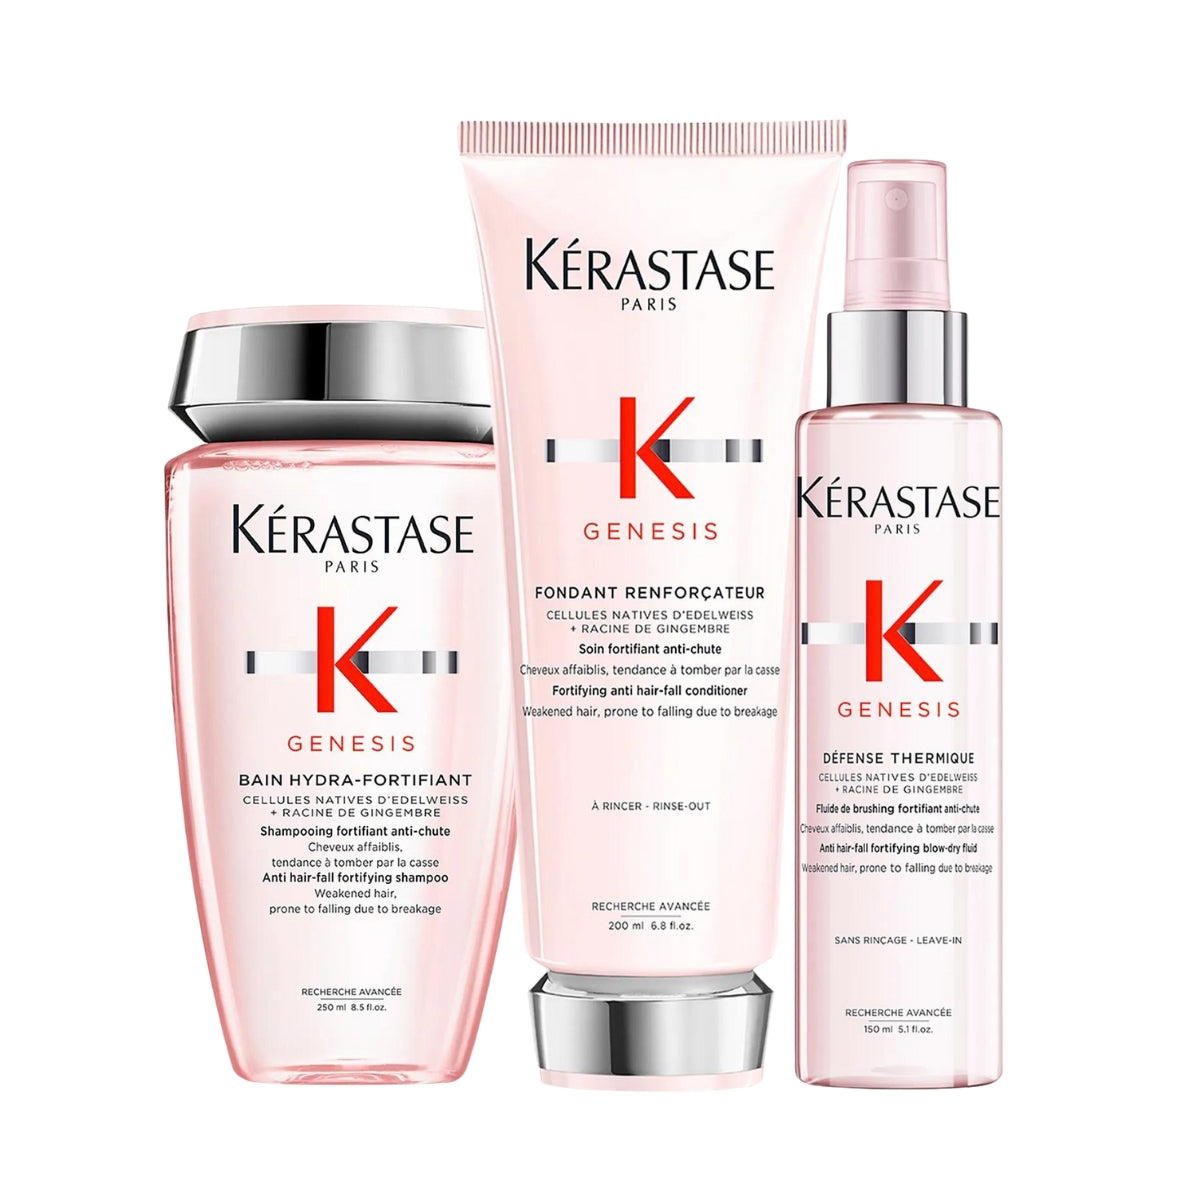 Kérastase Genesis Healthy Hair Growth and Protection Bundle SAVE 20%